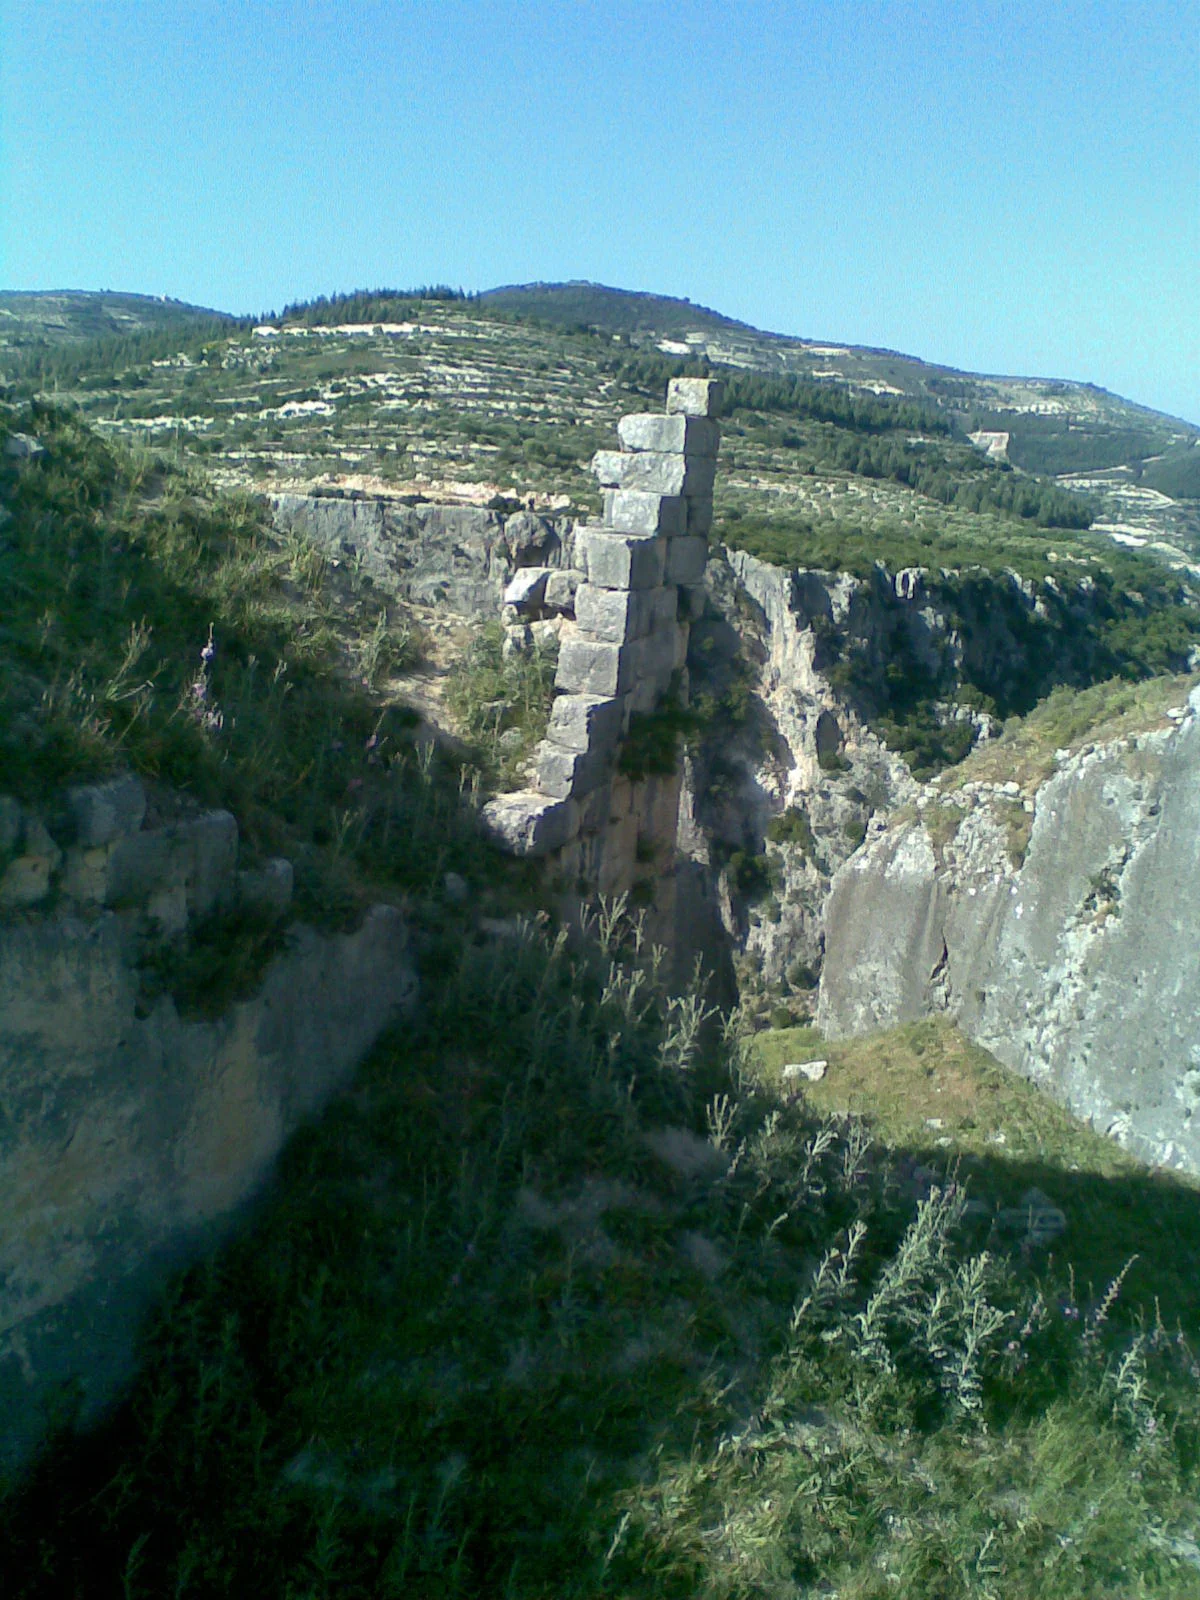 Jisr ash-Shughur, the ruins of Qalʿat ash-Shugr wa-Bakas, a twin crusader castle